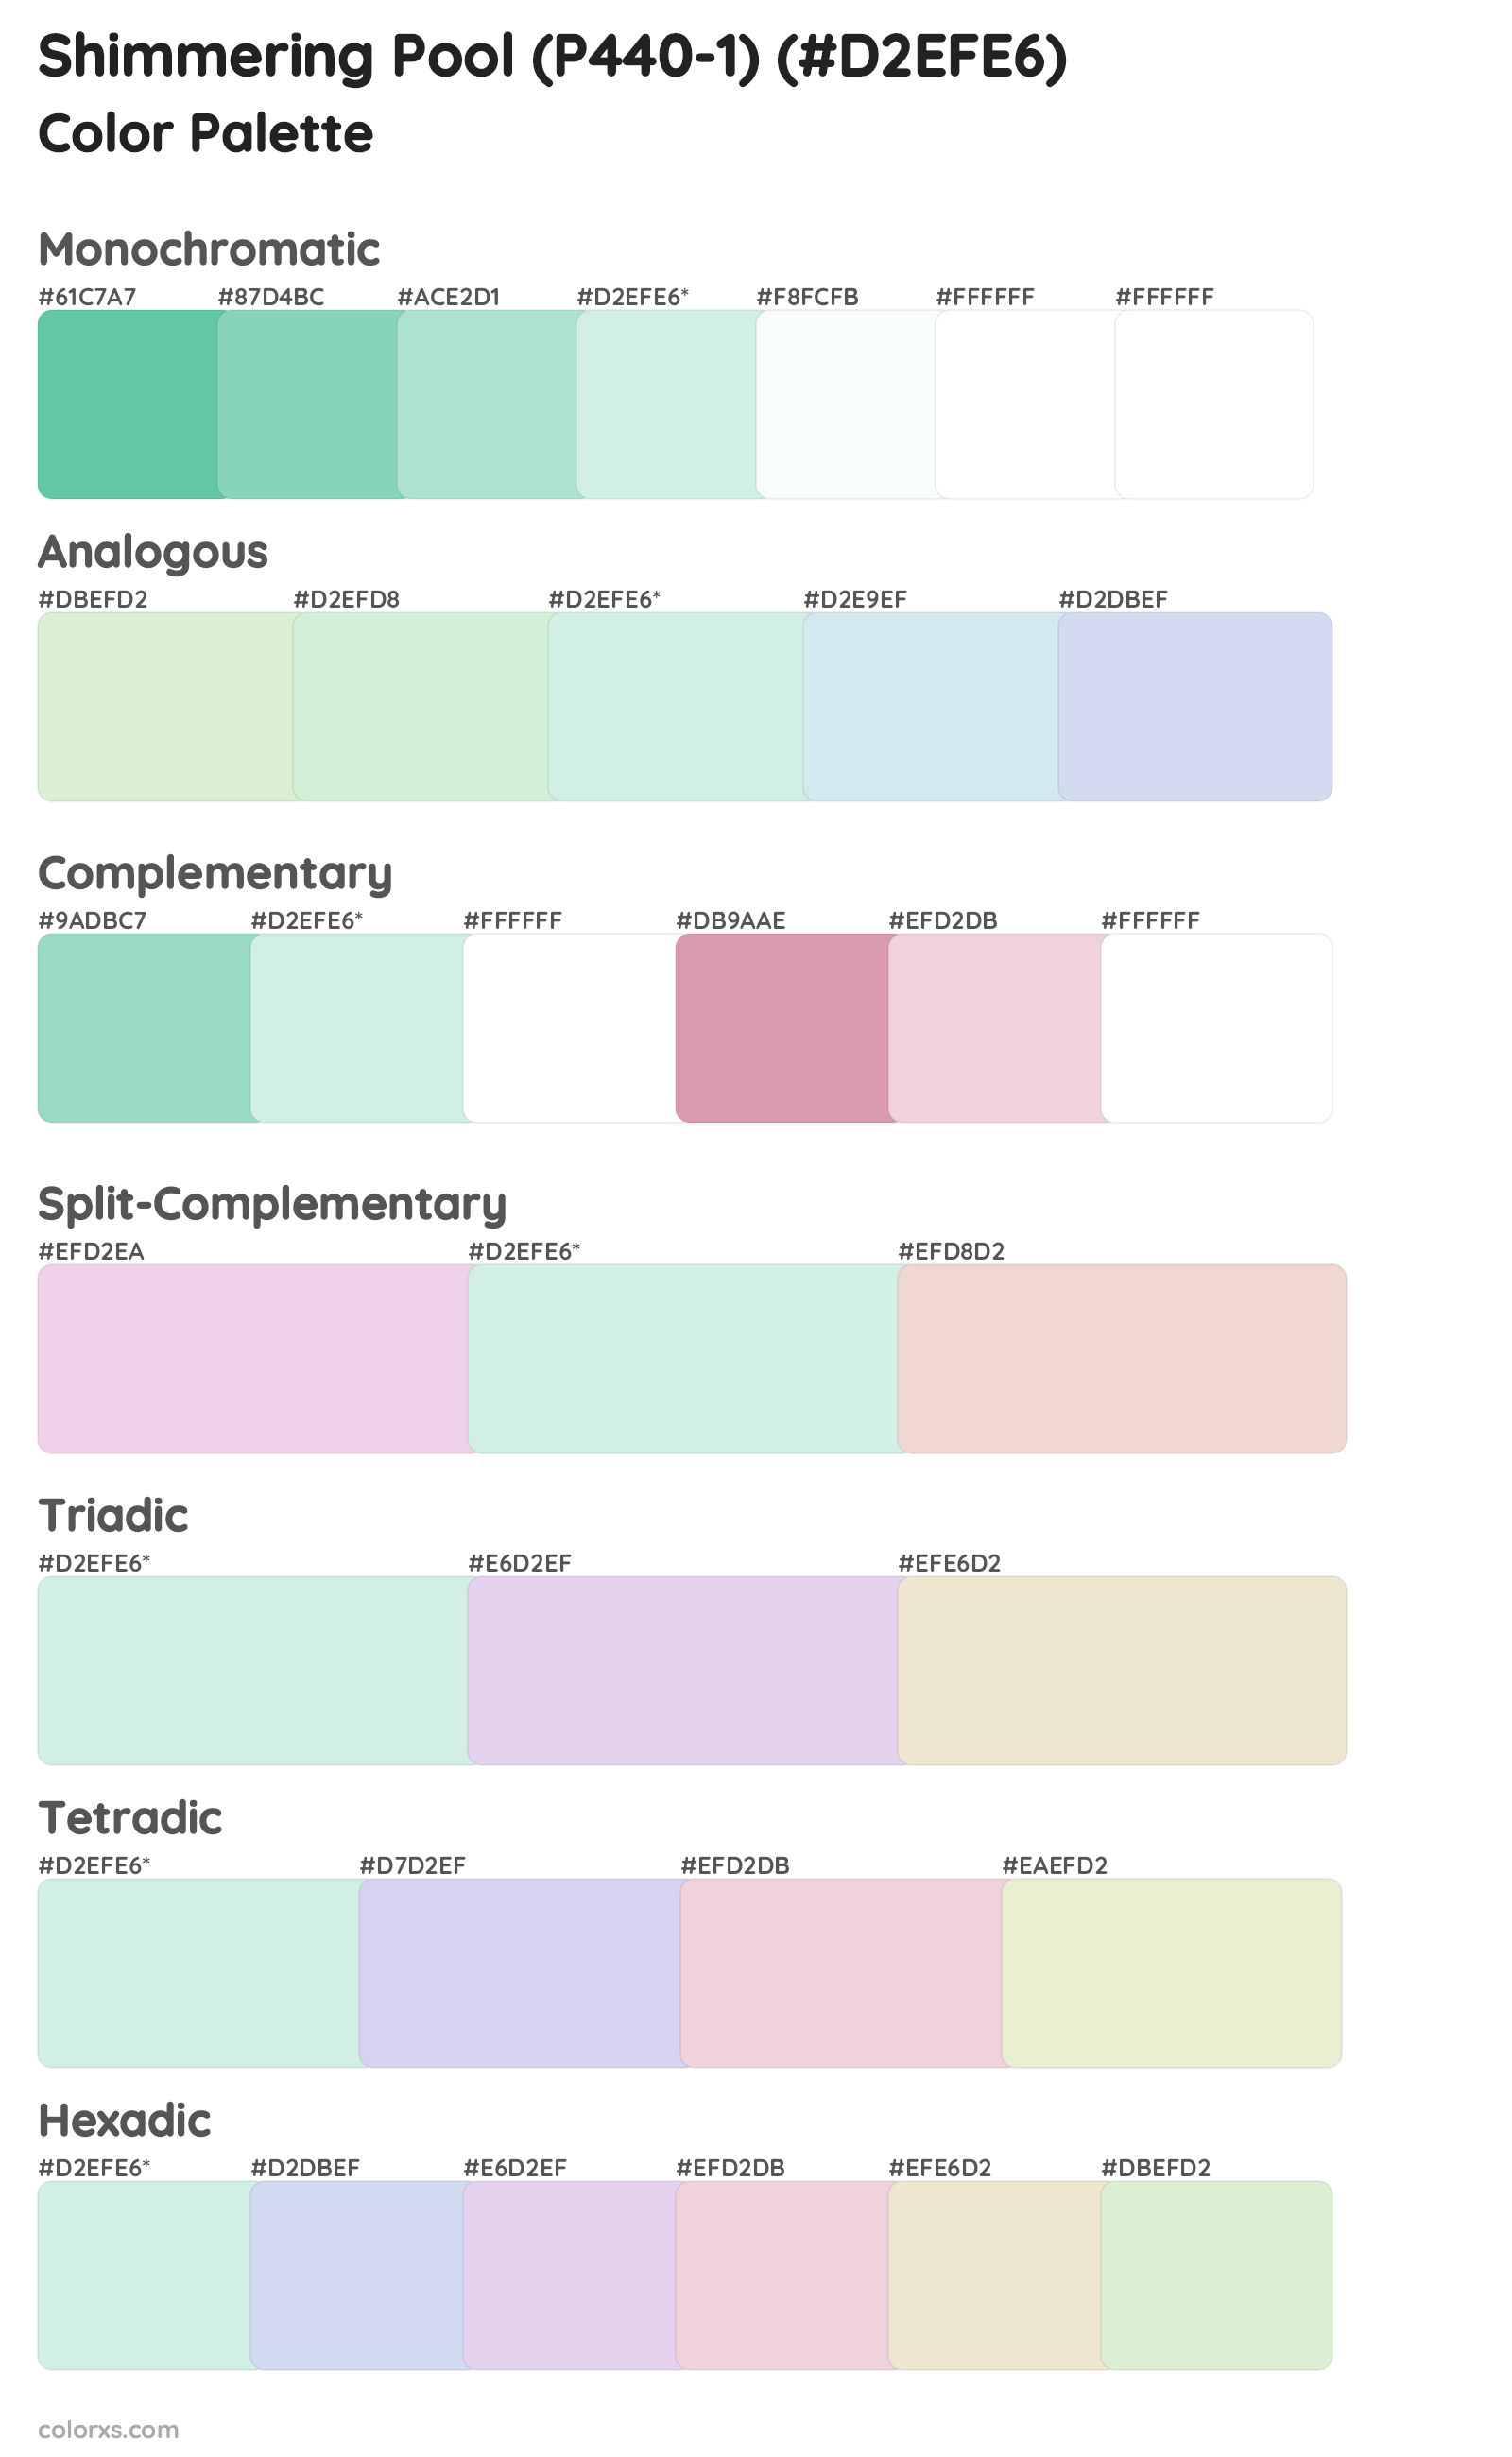 Shimmering Pool (P440-1) Color Scheme Palettes